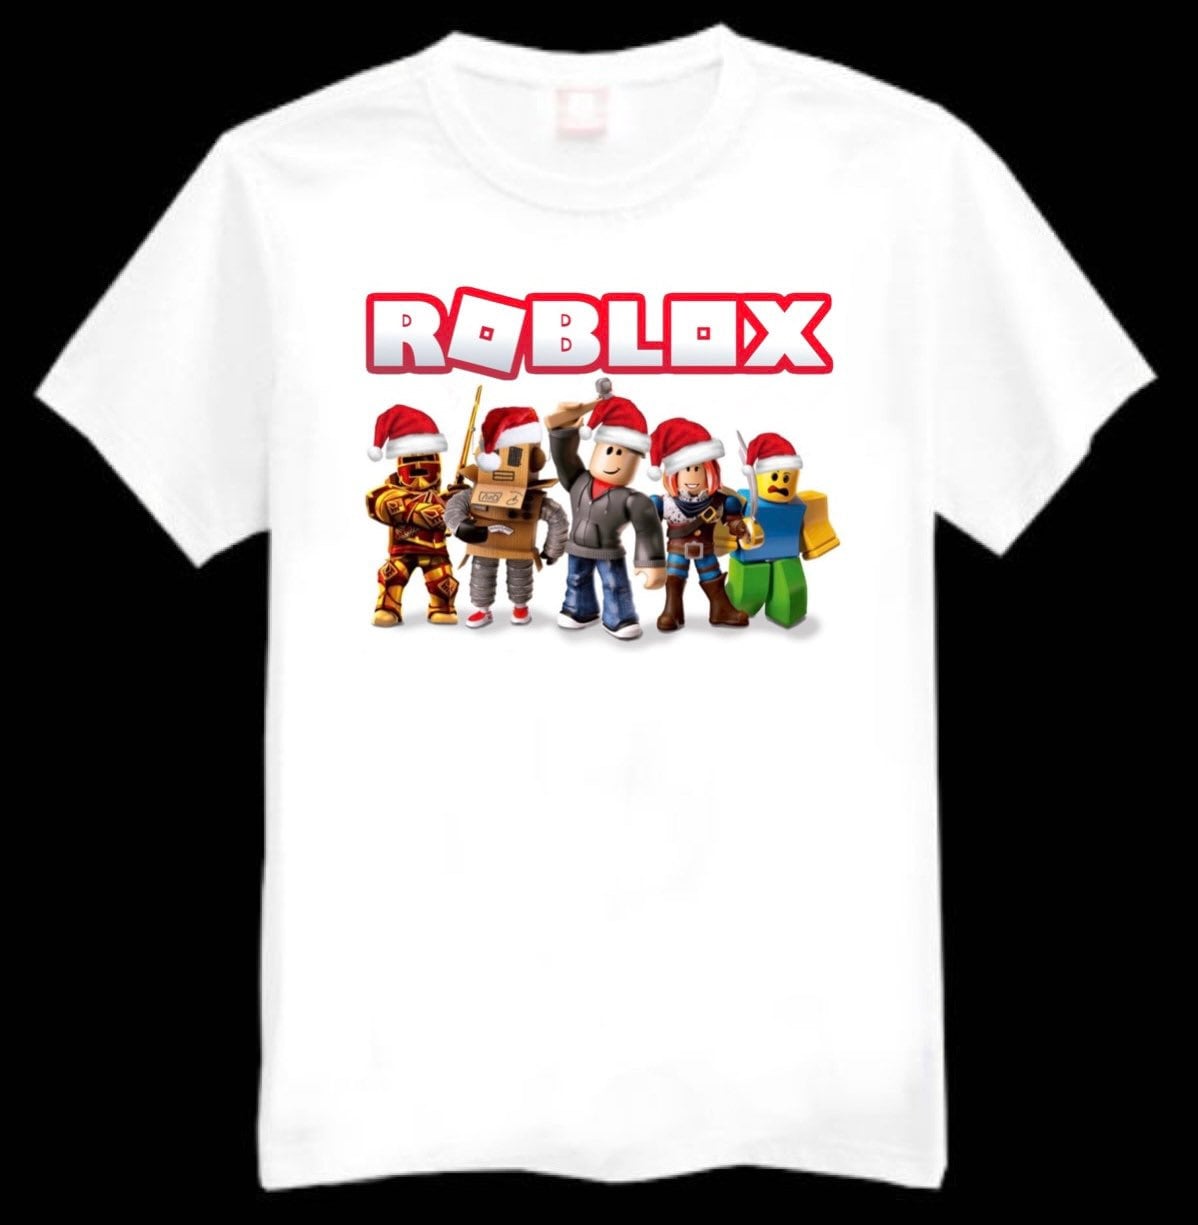 Camiseta Logo Roblox Jogo Online Gamer Adulto Infantil